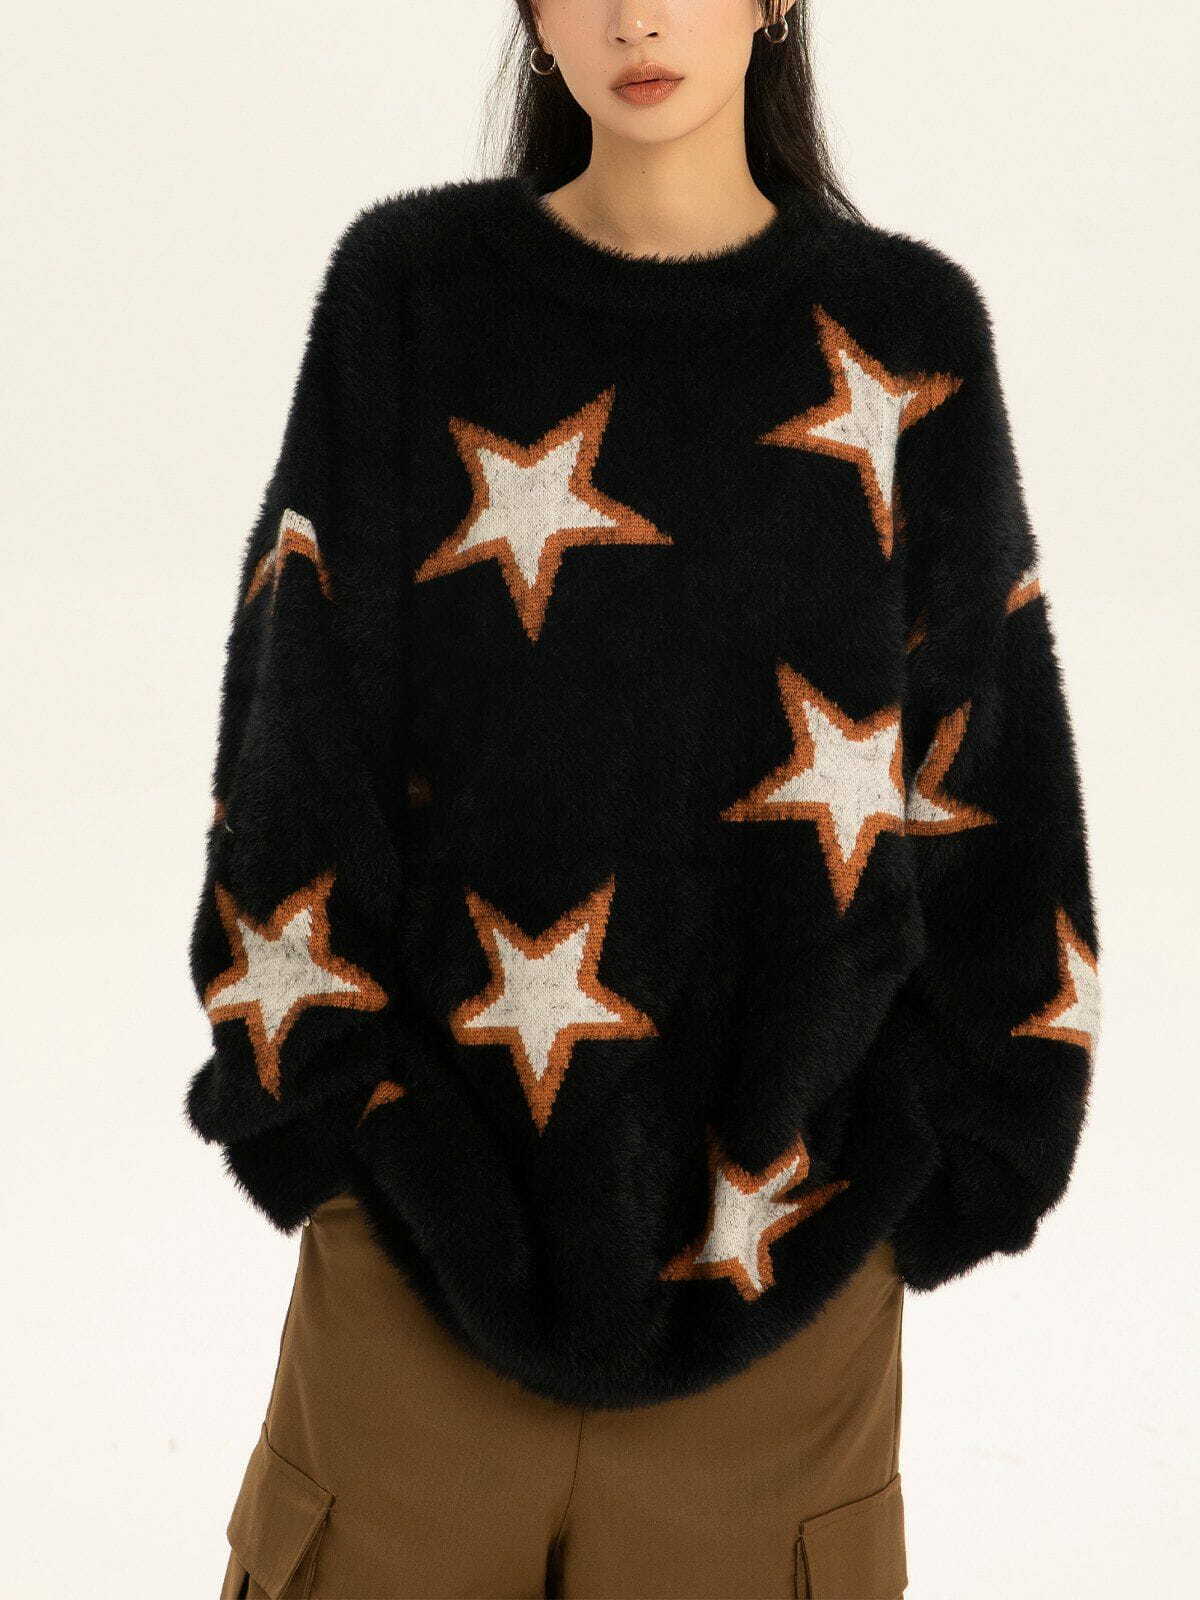 soft mohair jacquard sweater vintage elegance & streetwear chic 4812